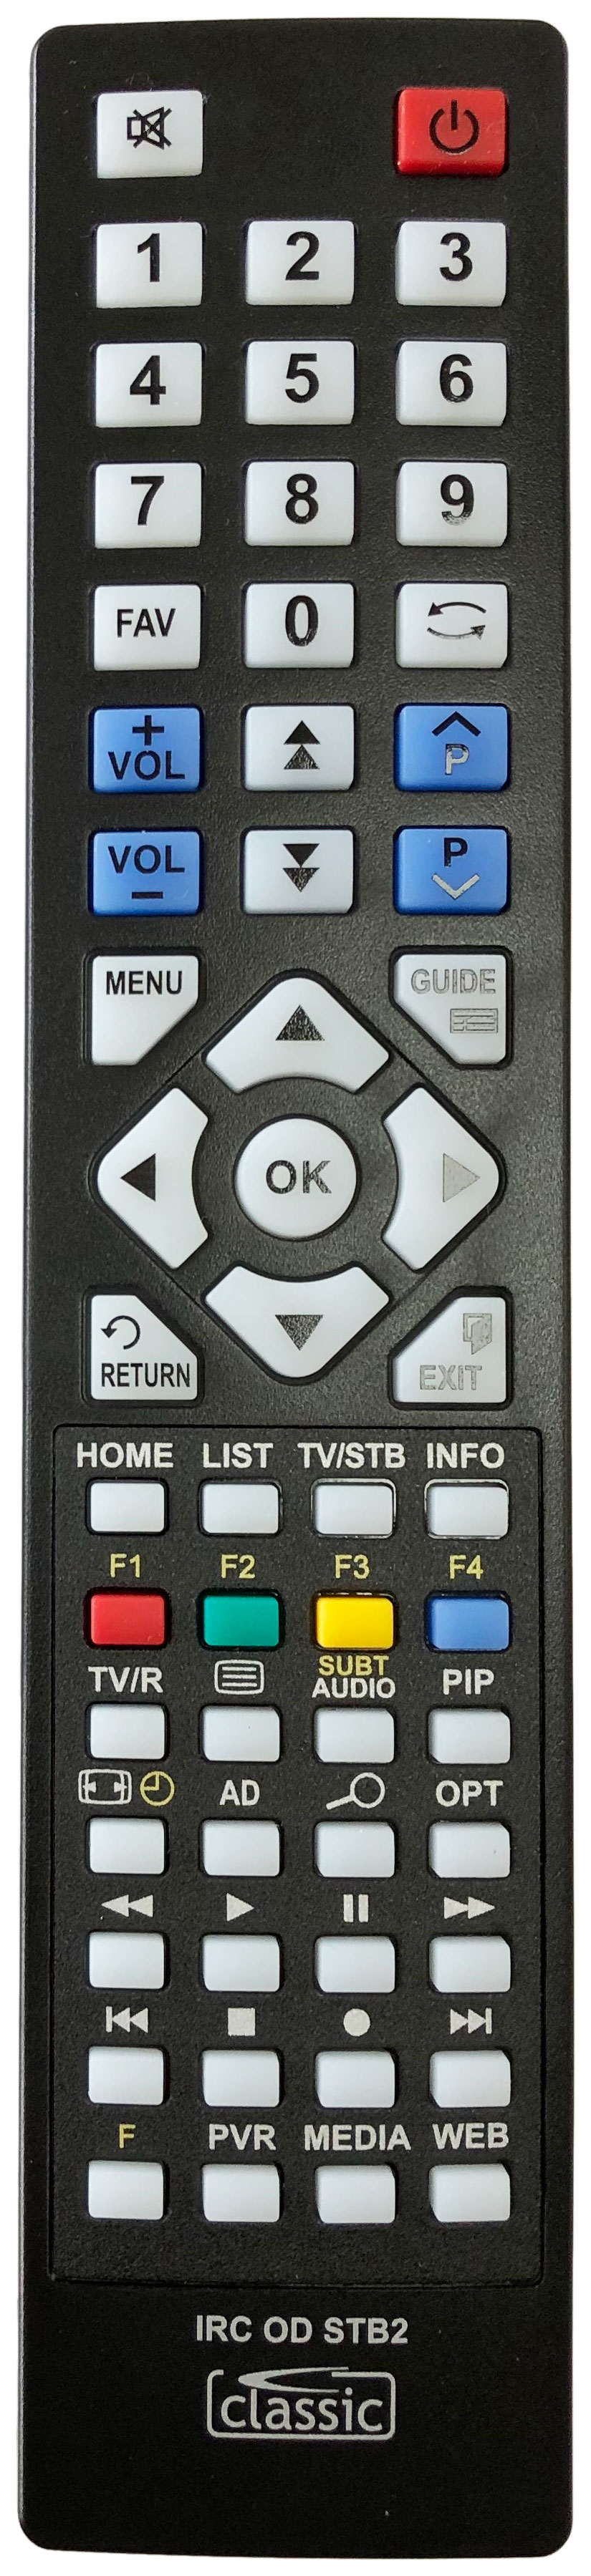 MANHATTAN PLAZA DS-100 Remote Control 